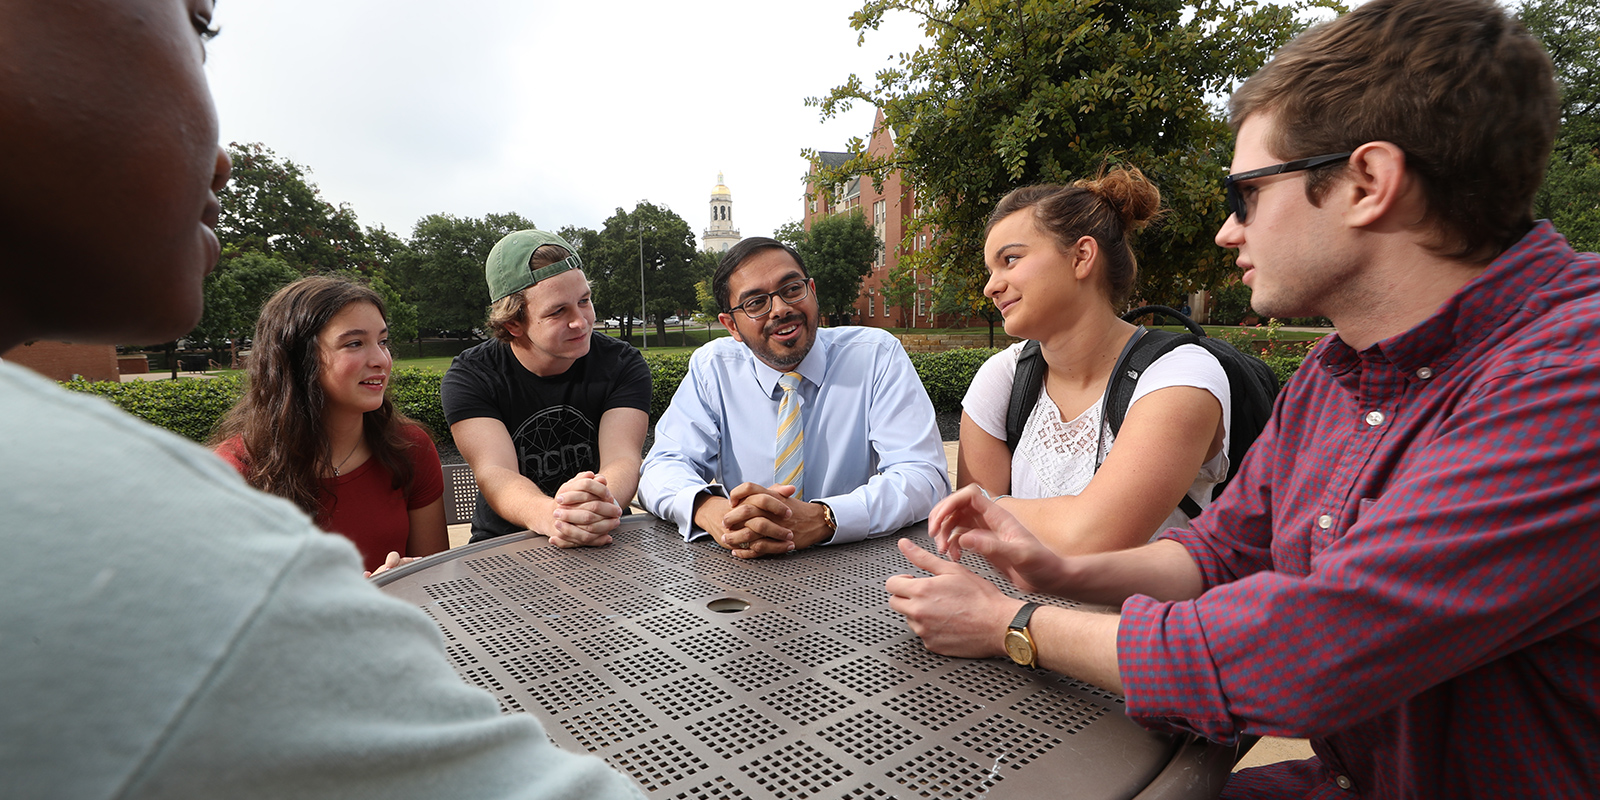 Baylor professor Rishi Sriram engaging with students on campus